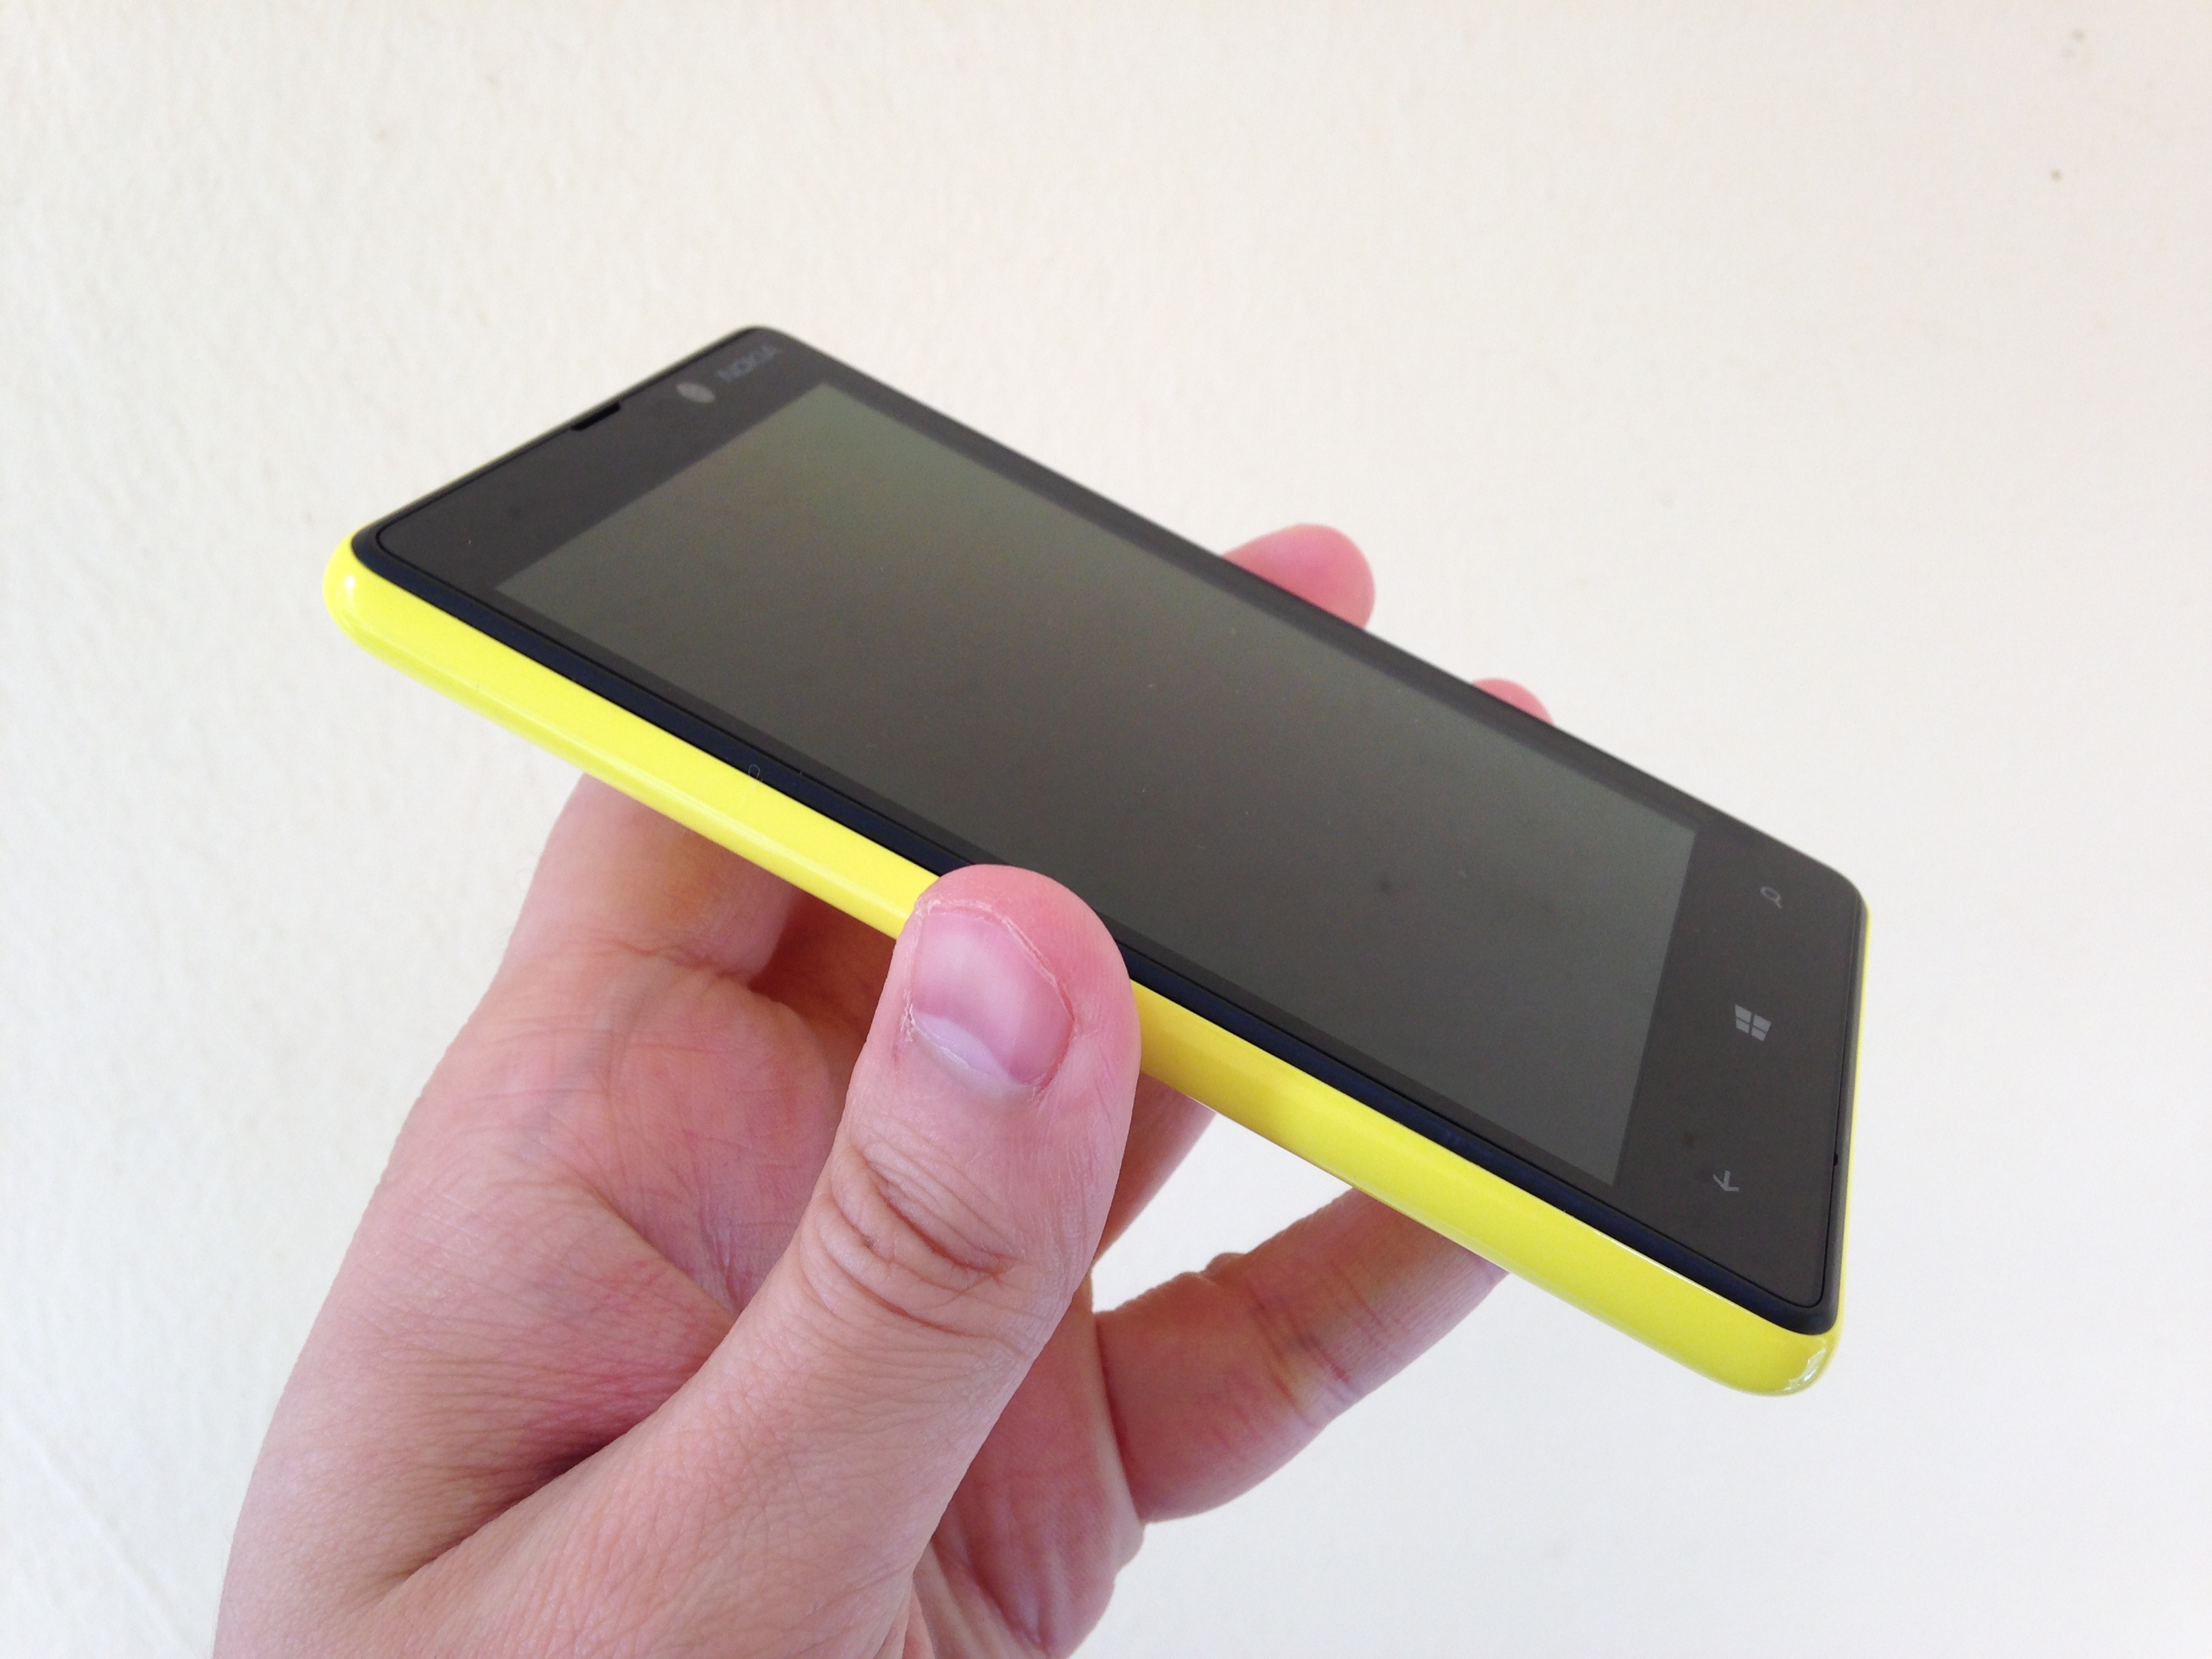 Nokia Lumia 820 Windows 8 OS Phone